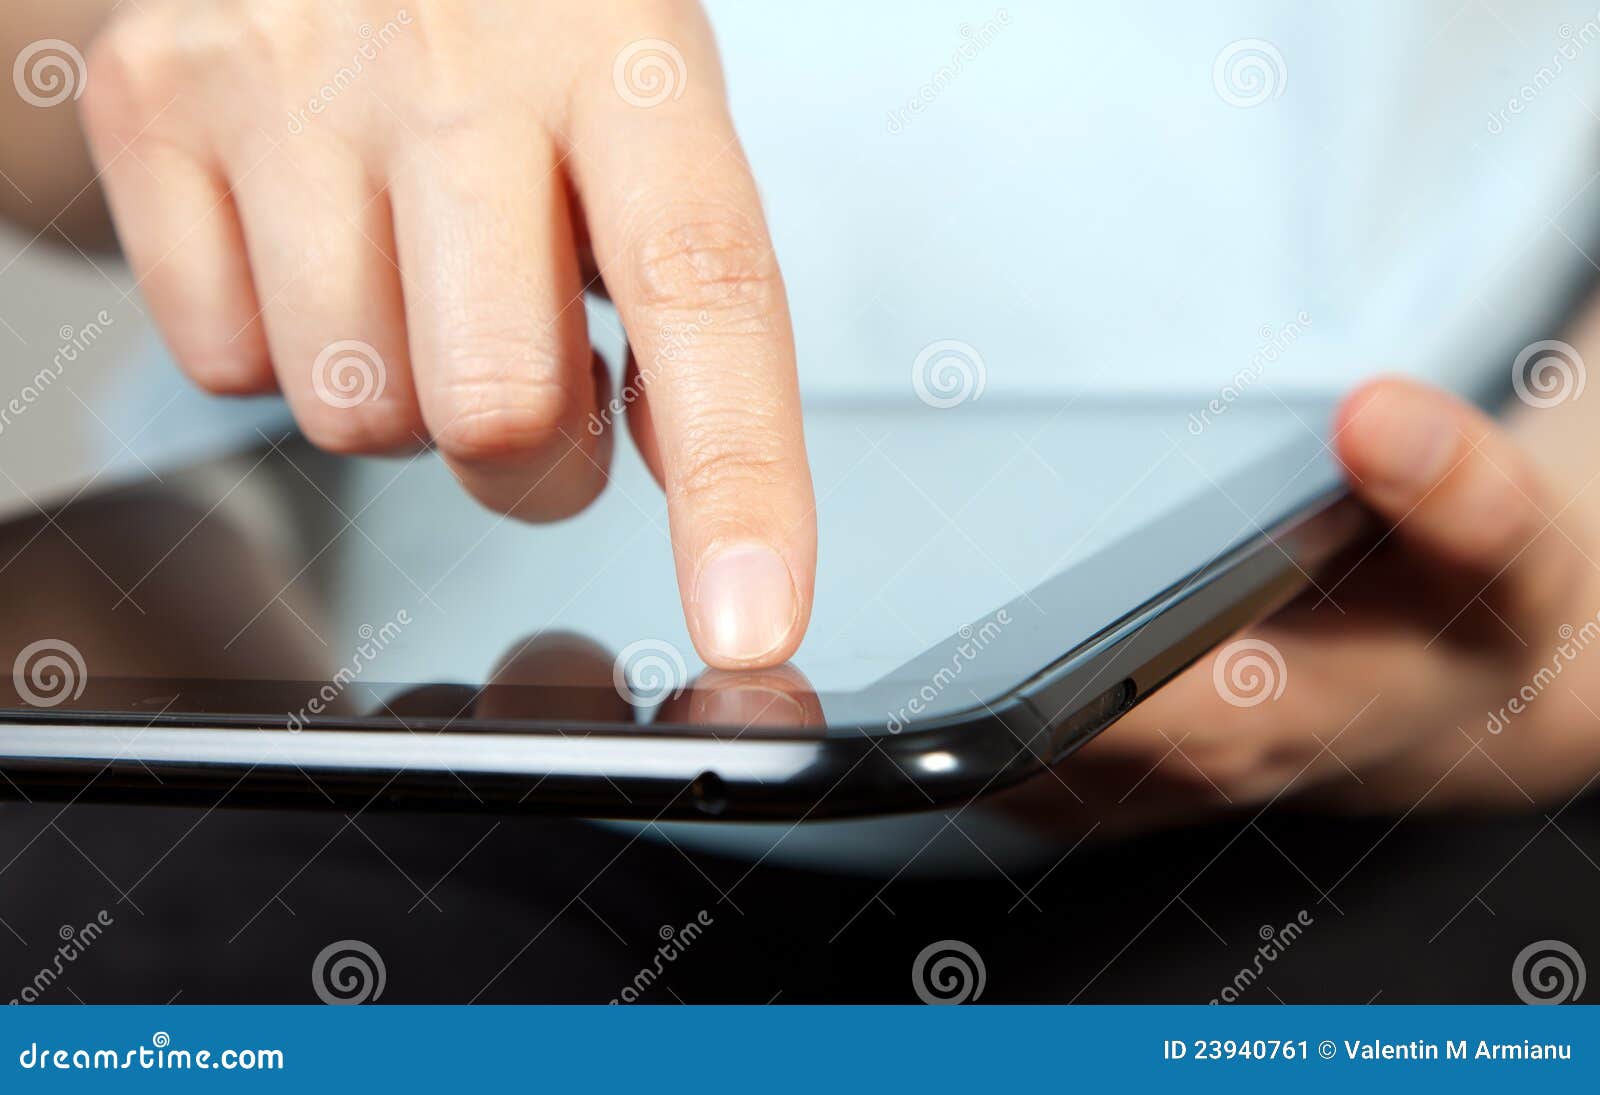 finger pointing on tablet